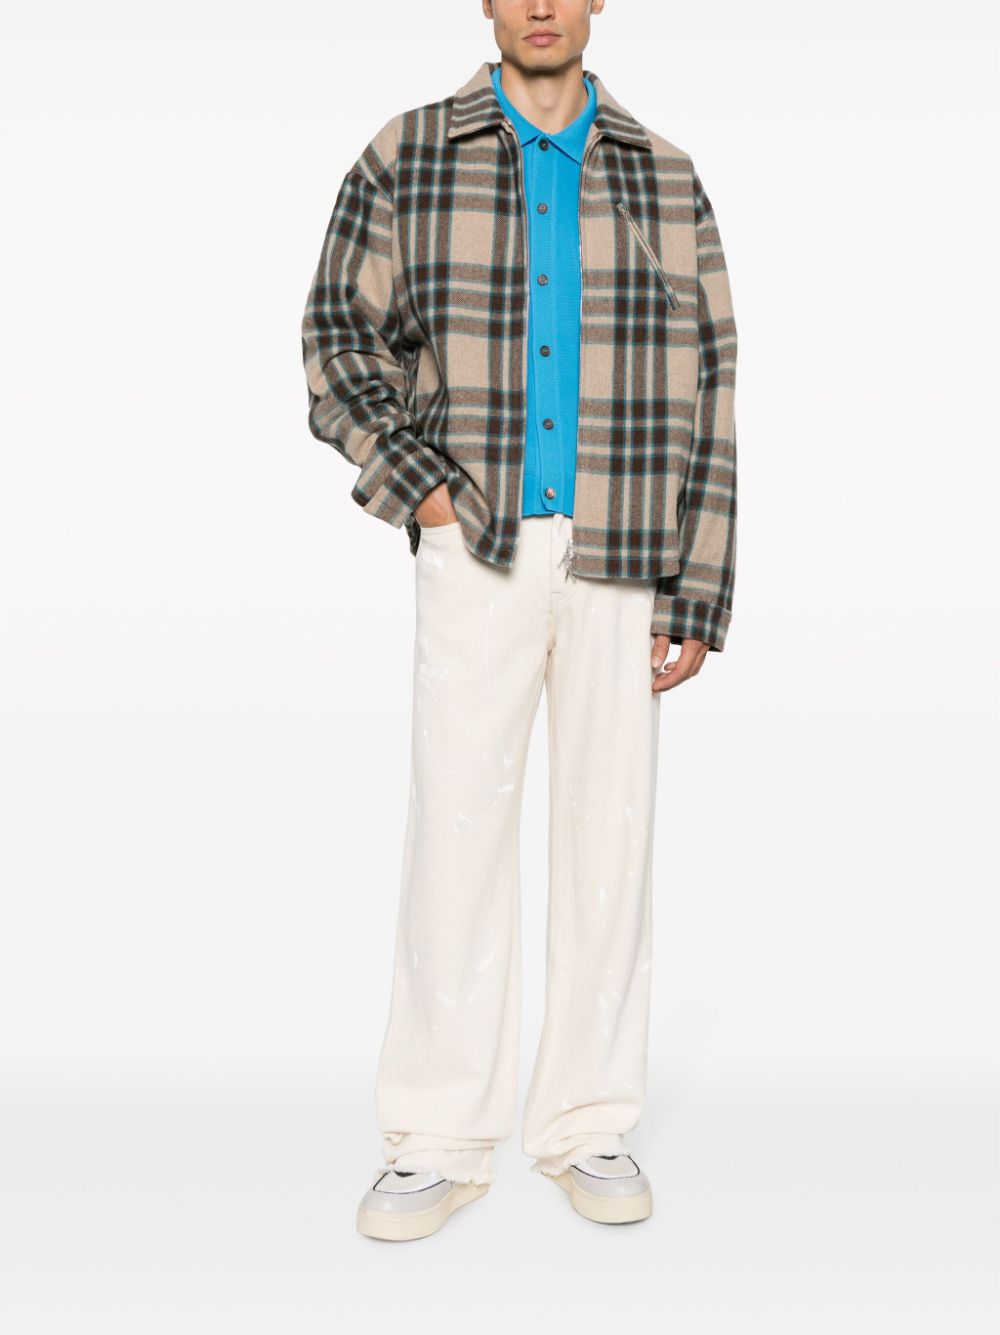 Represent plaid-check flannel shirt - BROWN CHECK